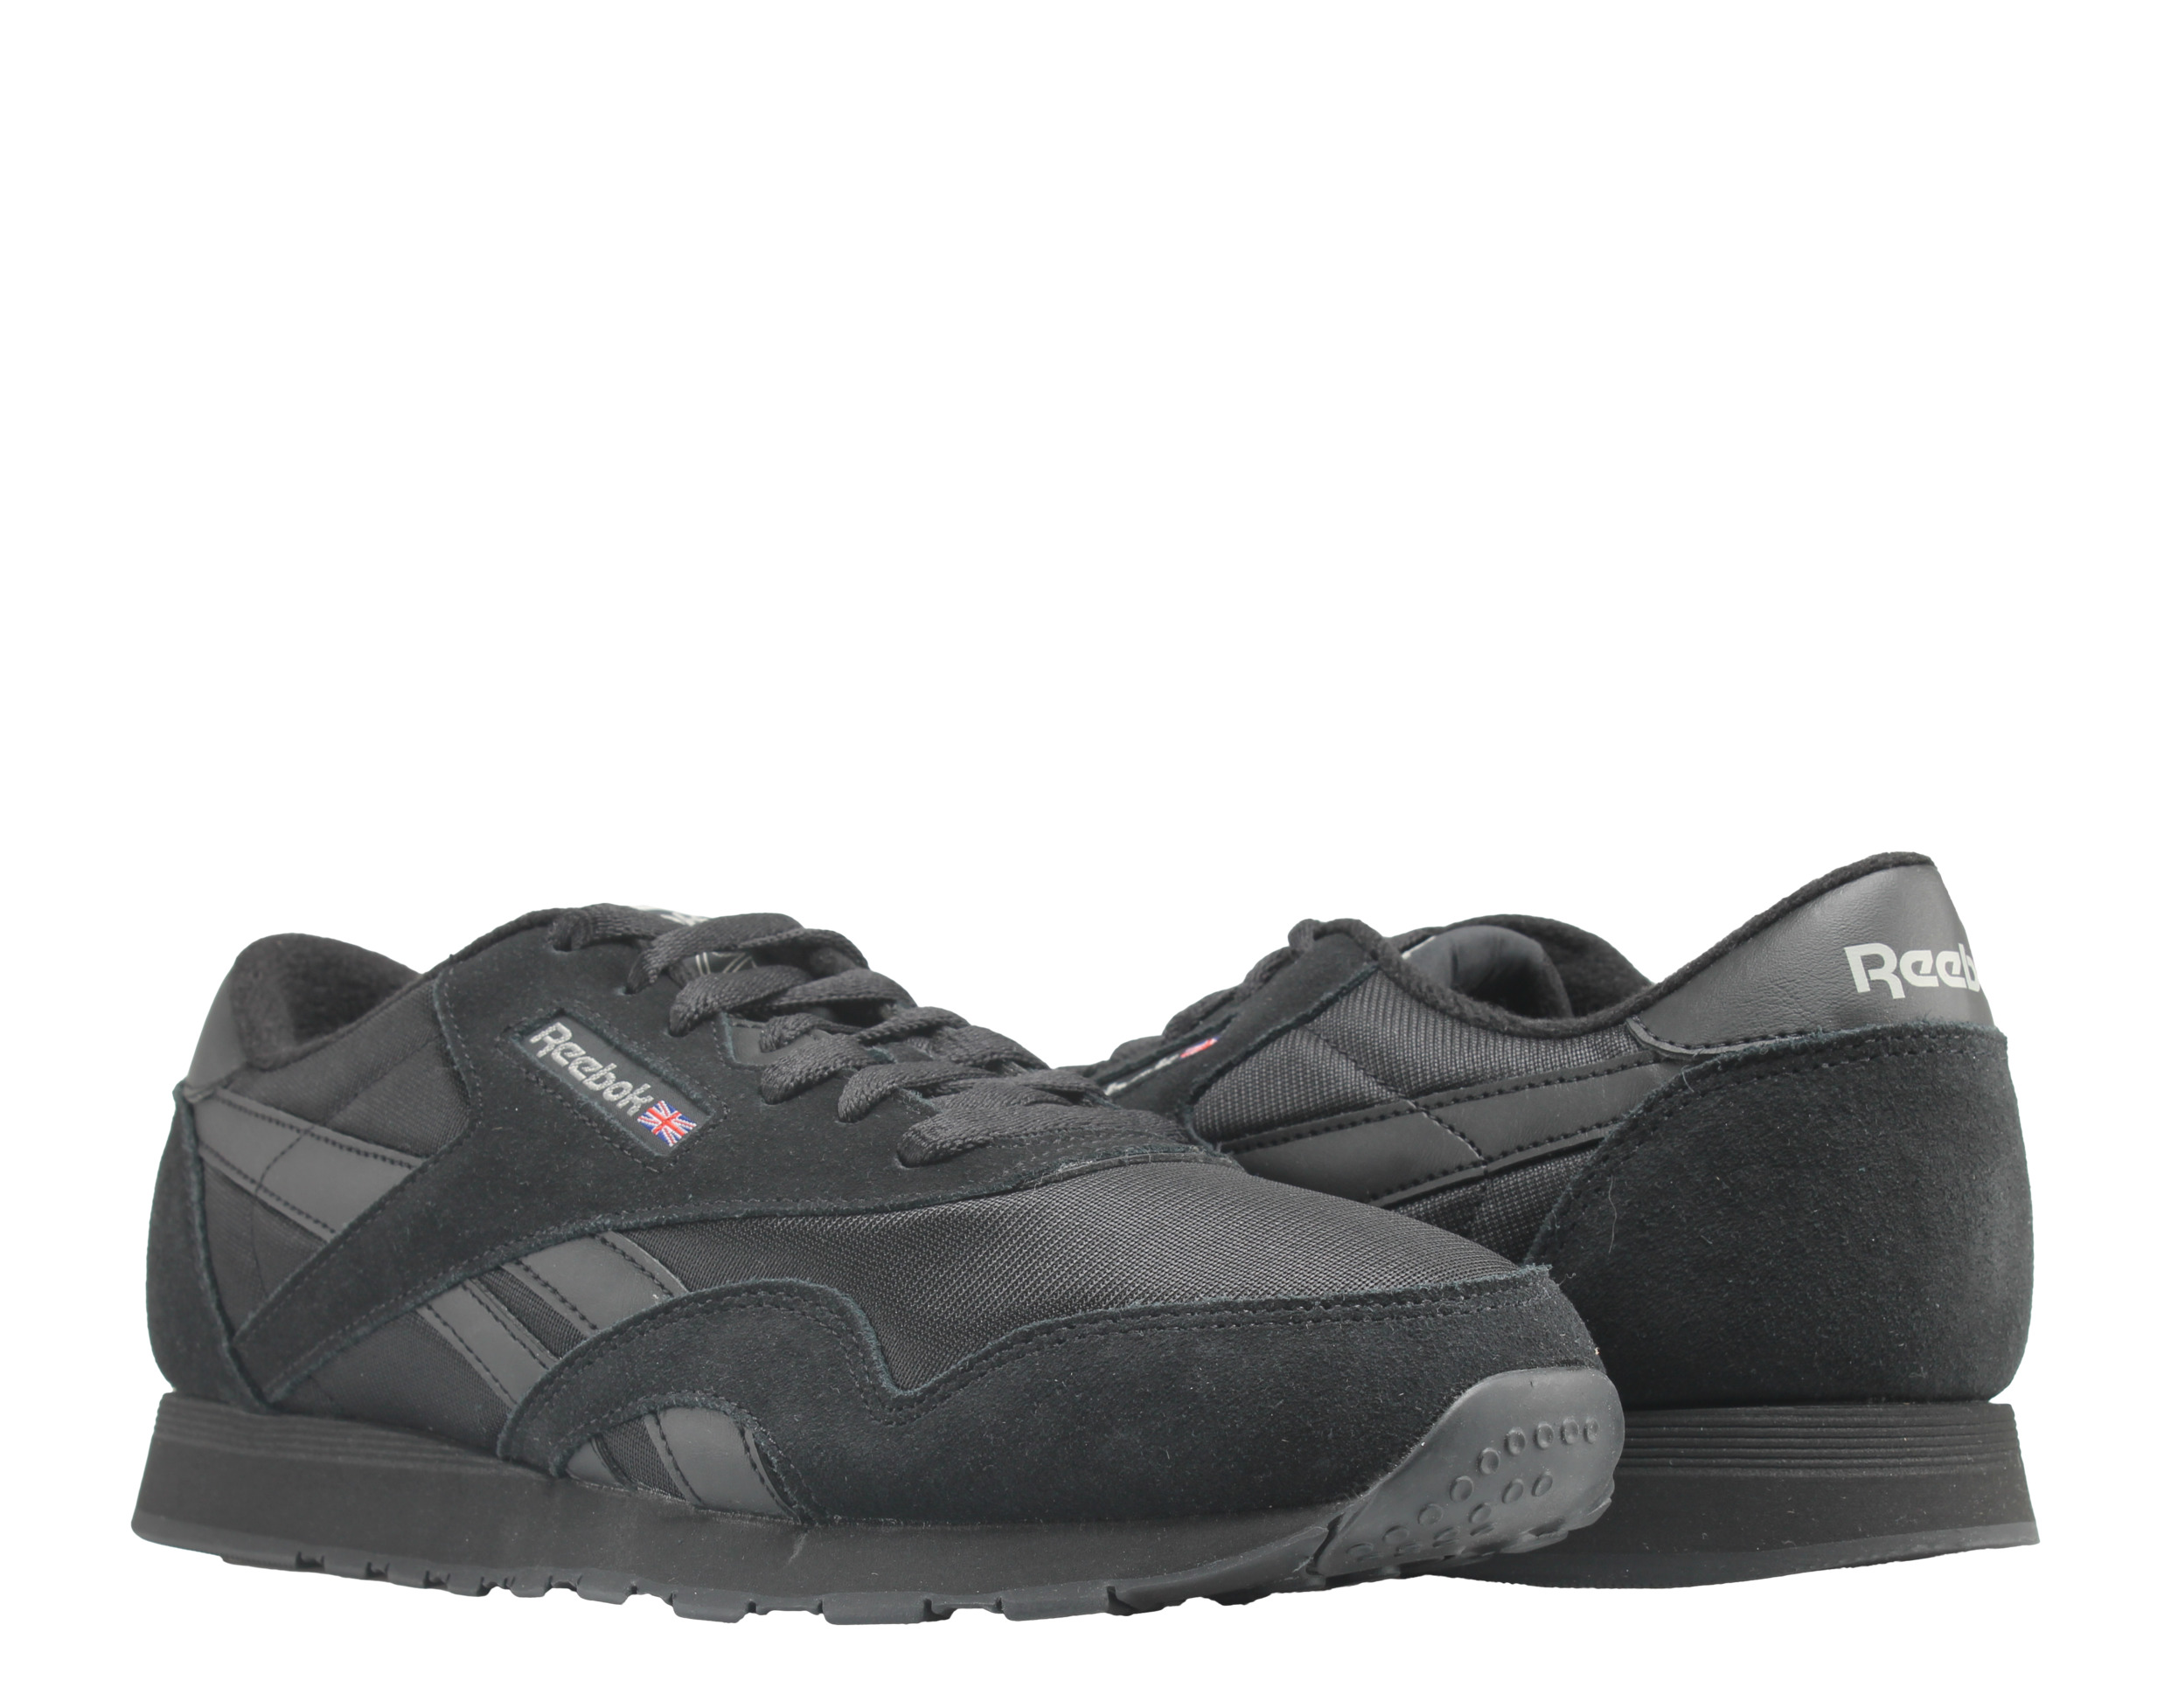 Reebok Classic Nylon Men's Running Shoes Size 12 - image 1 of 6